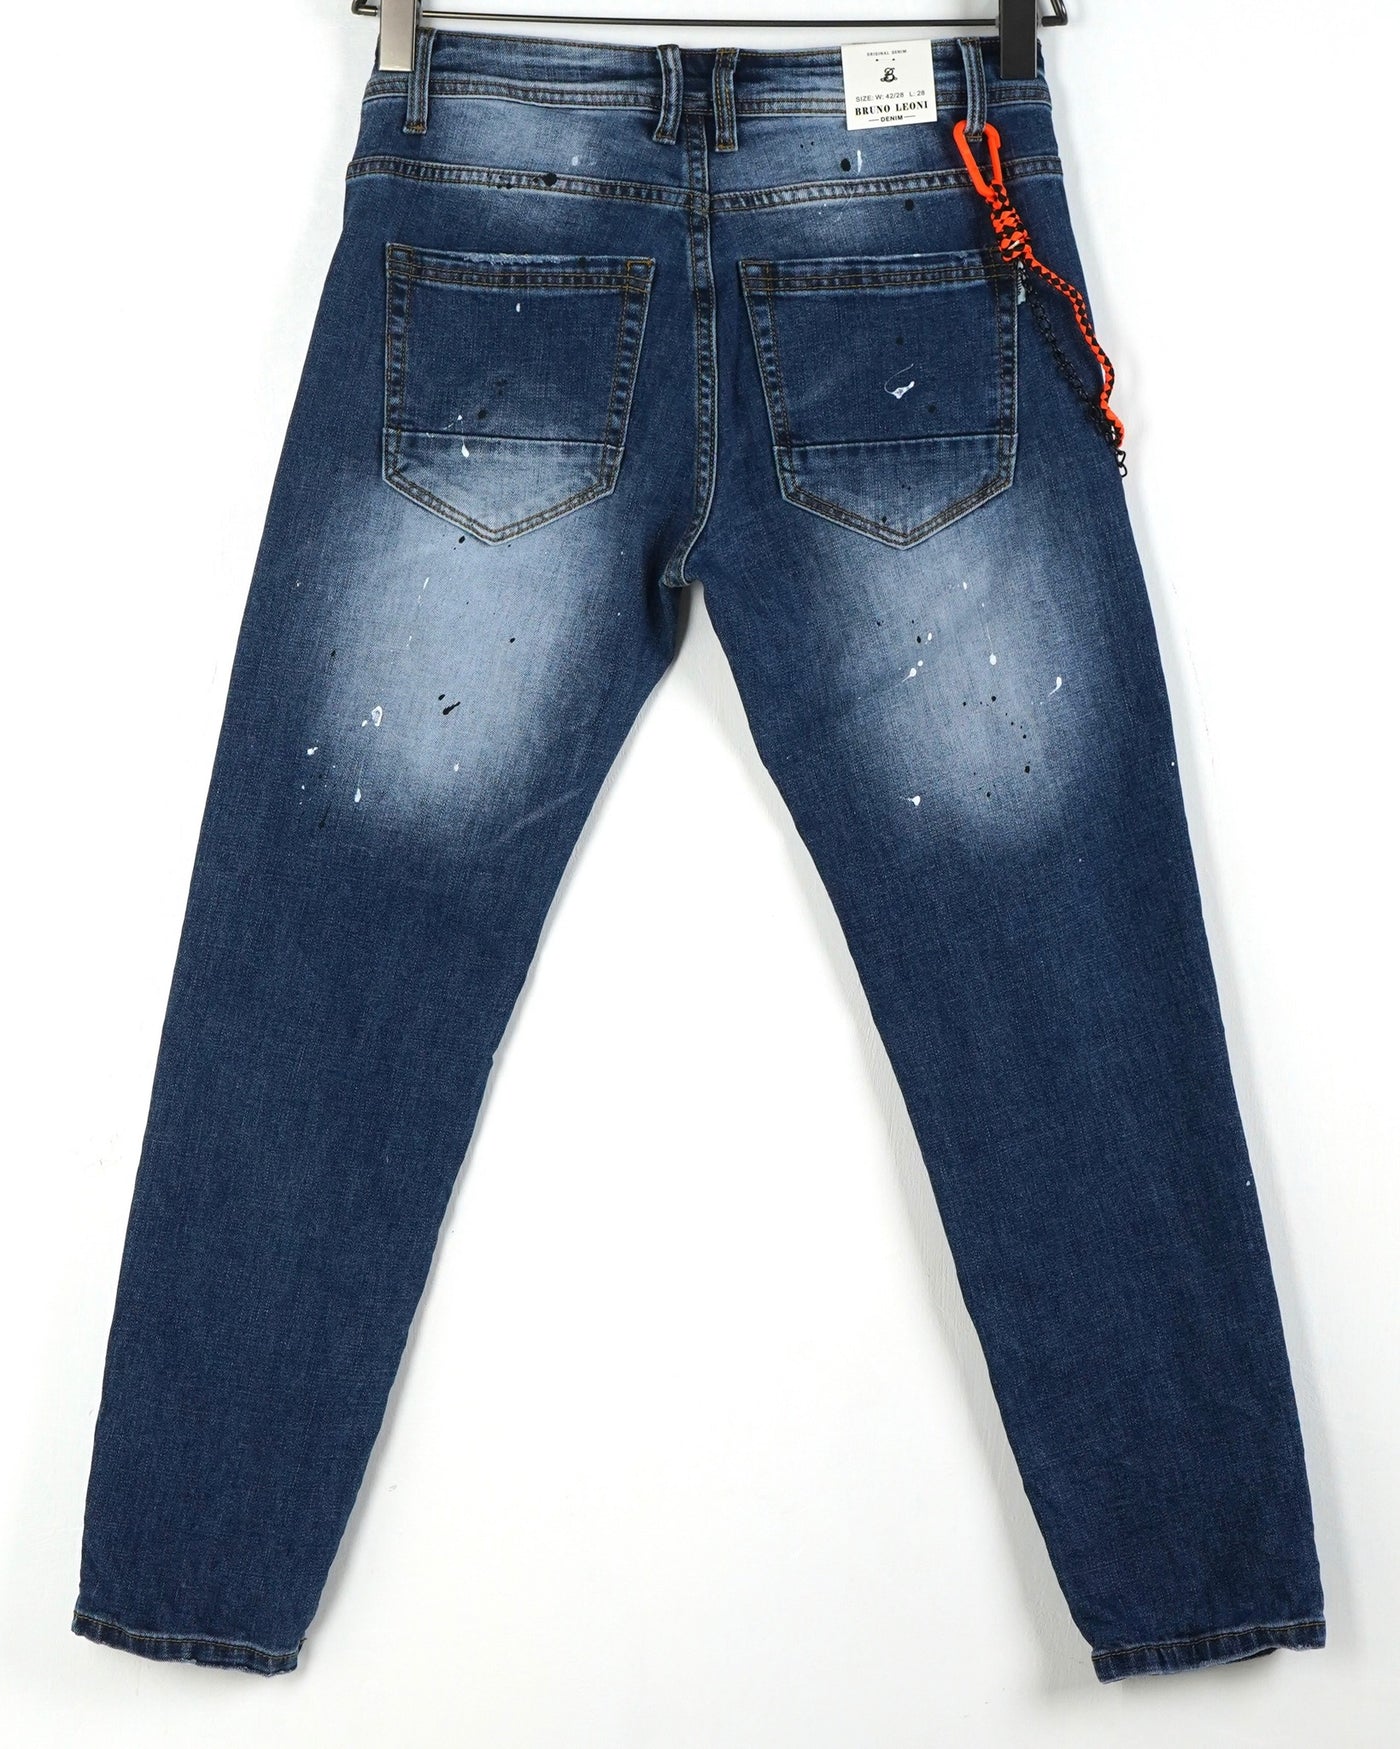 jeans anvip2367